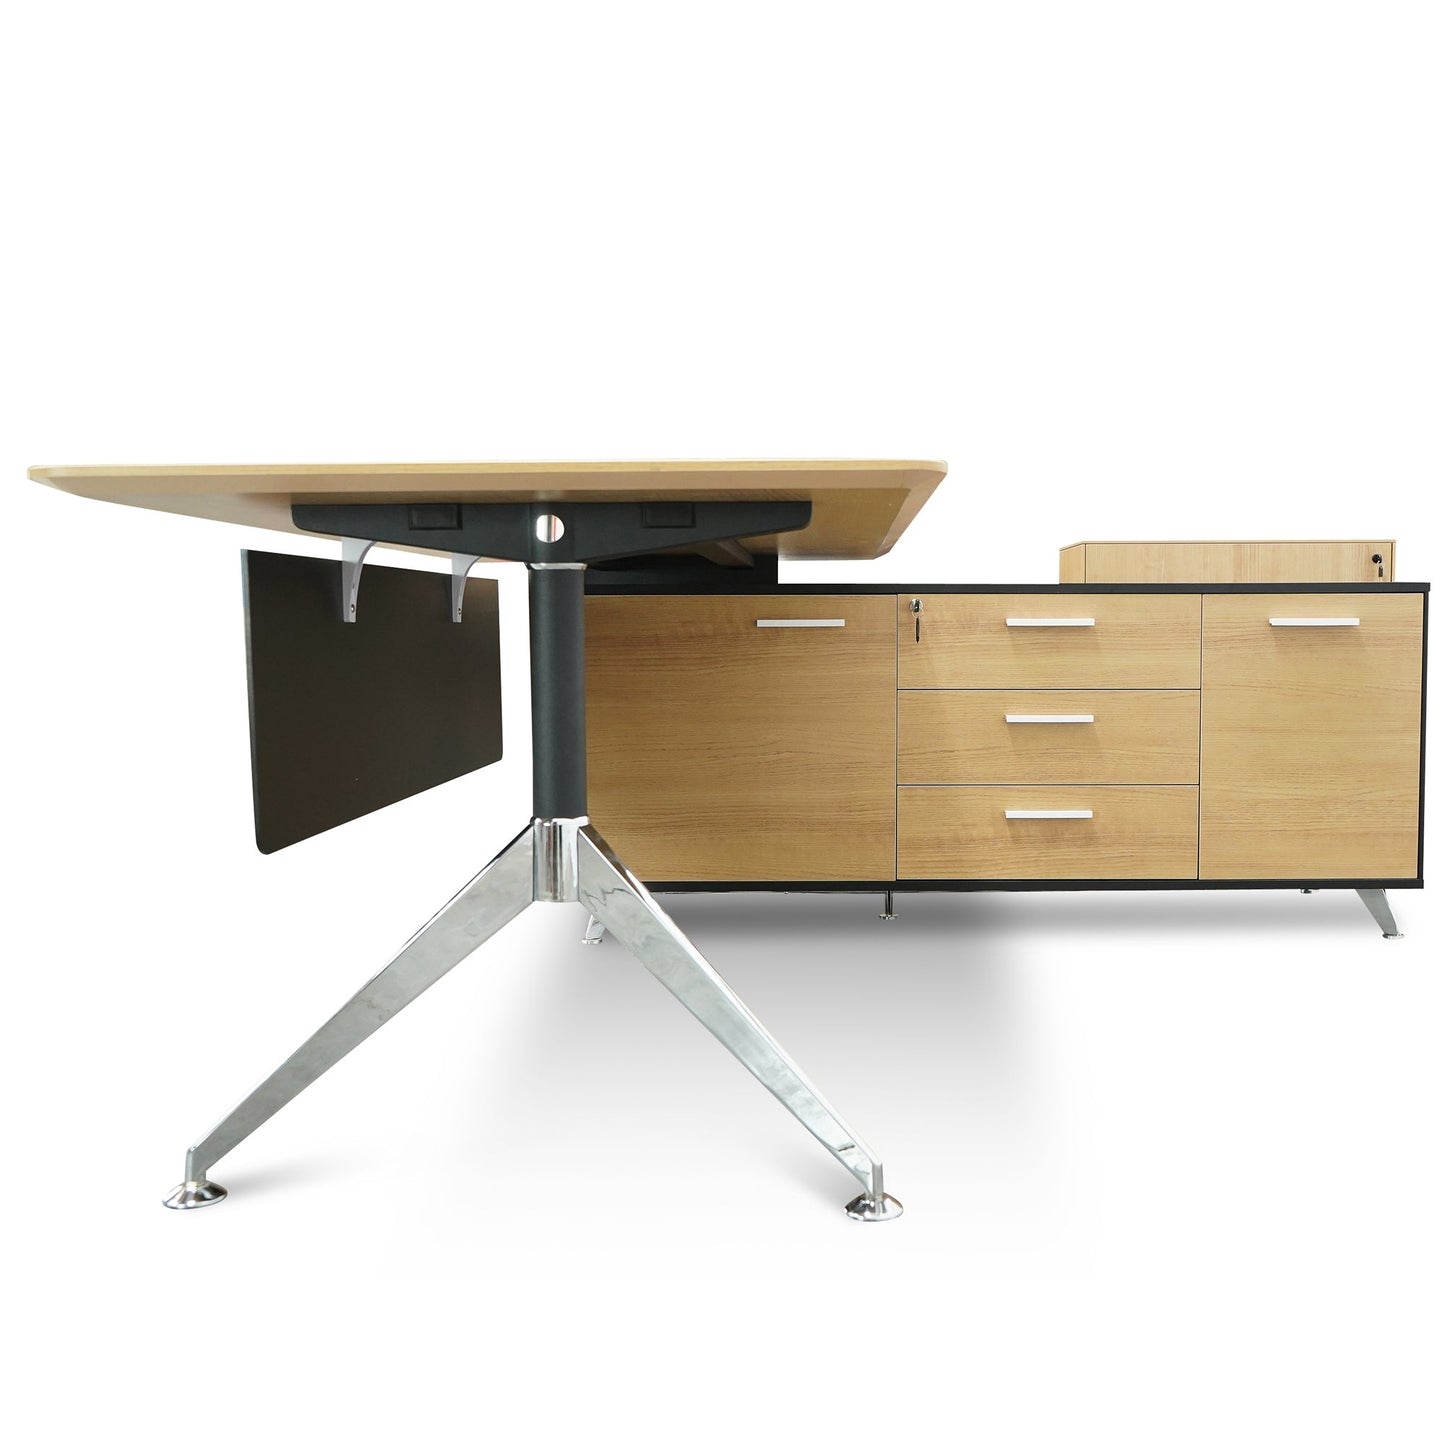 1.95m Executive Desk Right Return - Black Frame with Natural Top and Drawers-Desk-Calibre-Prime Furniture